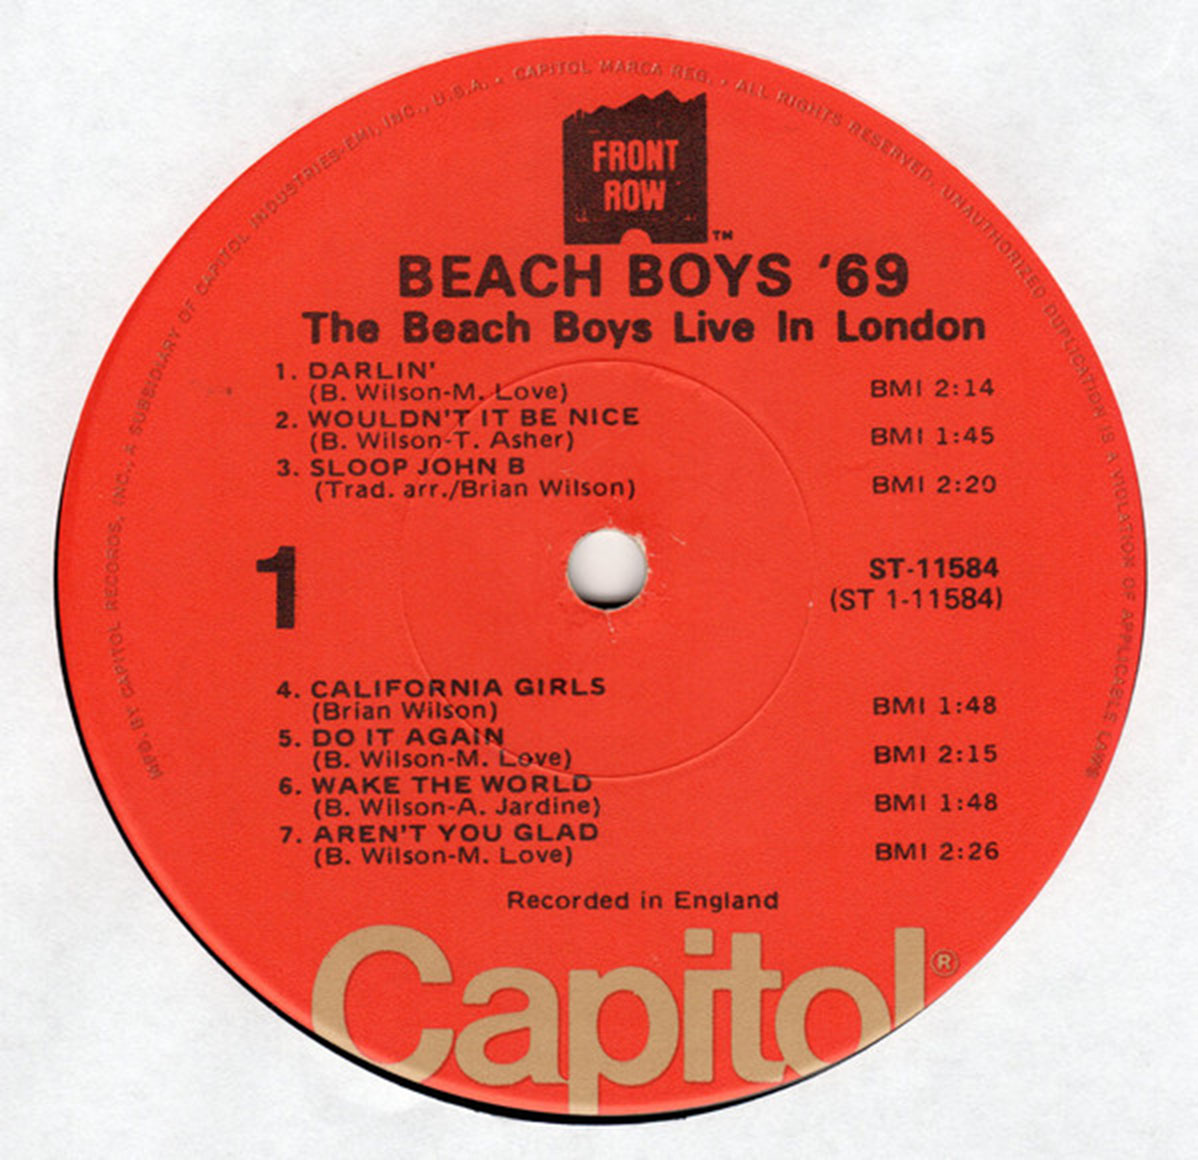 The Beach Boys – Beach Boys '69  Live In London - US Pressing